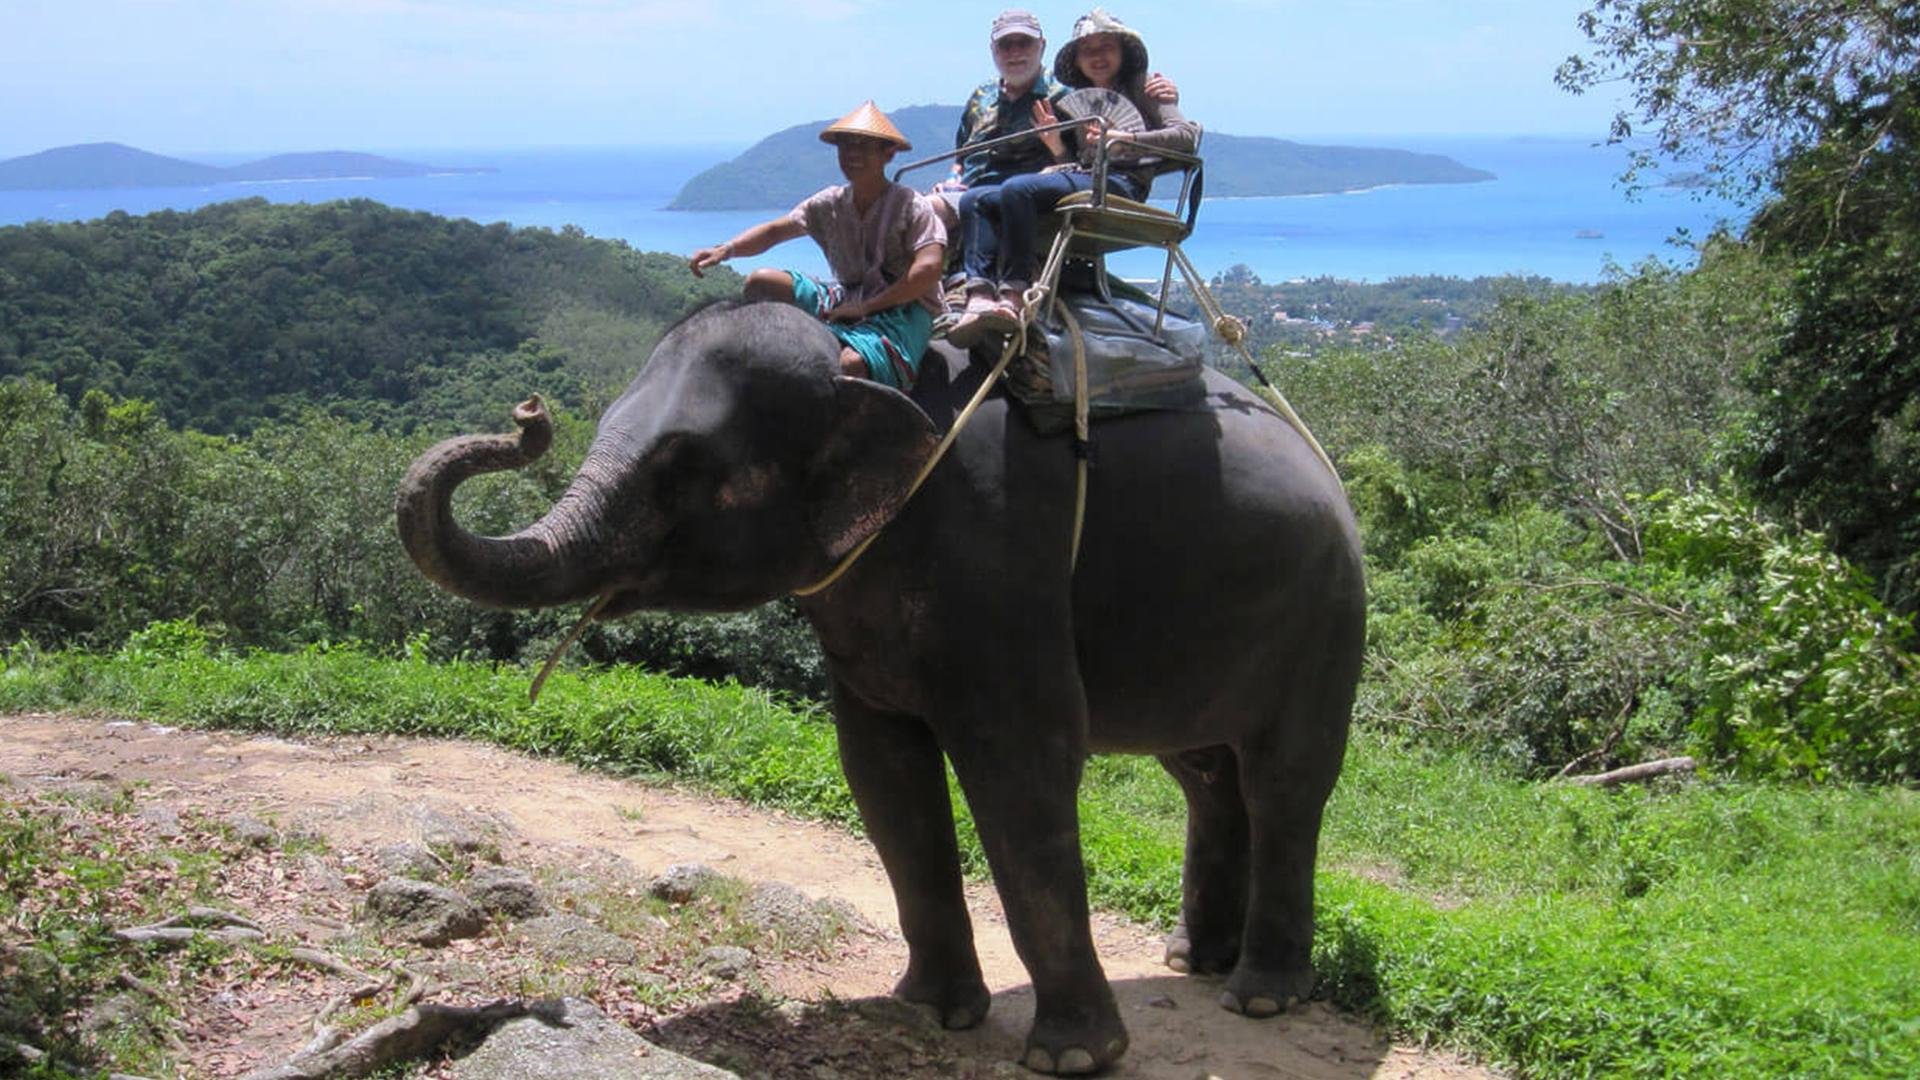 Elephant sanctuary park. Тайланд Пхукет экскурсии на слонах. Таиланд Пхукет слоны. Катание слоны на Пхукете. Тайланд Пхукет слон.